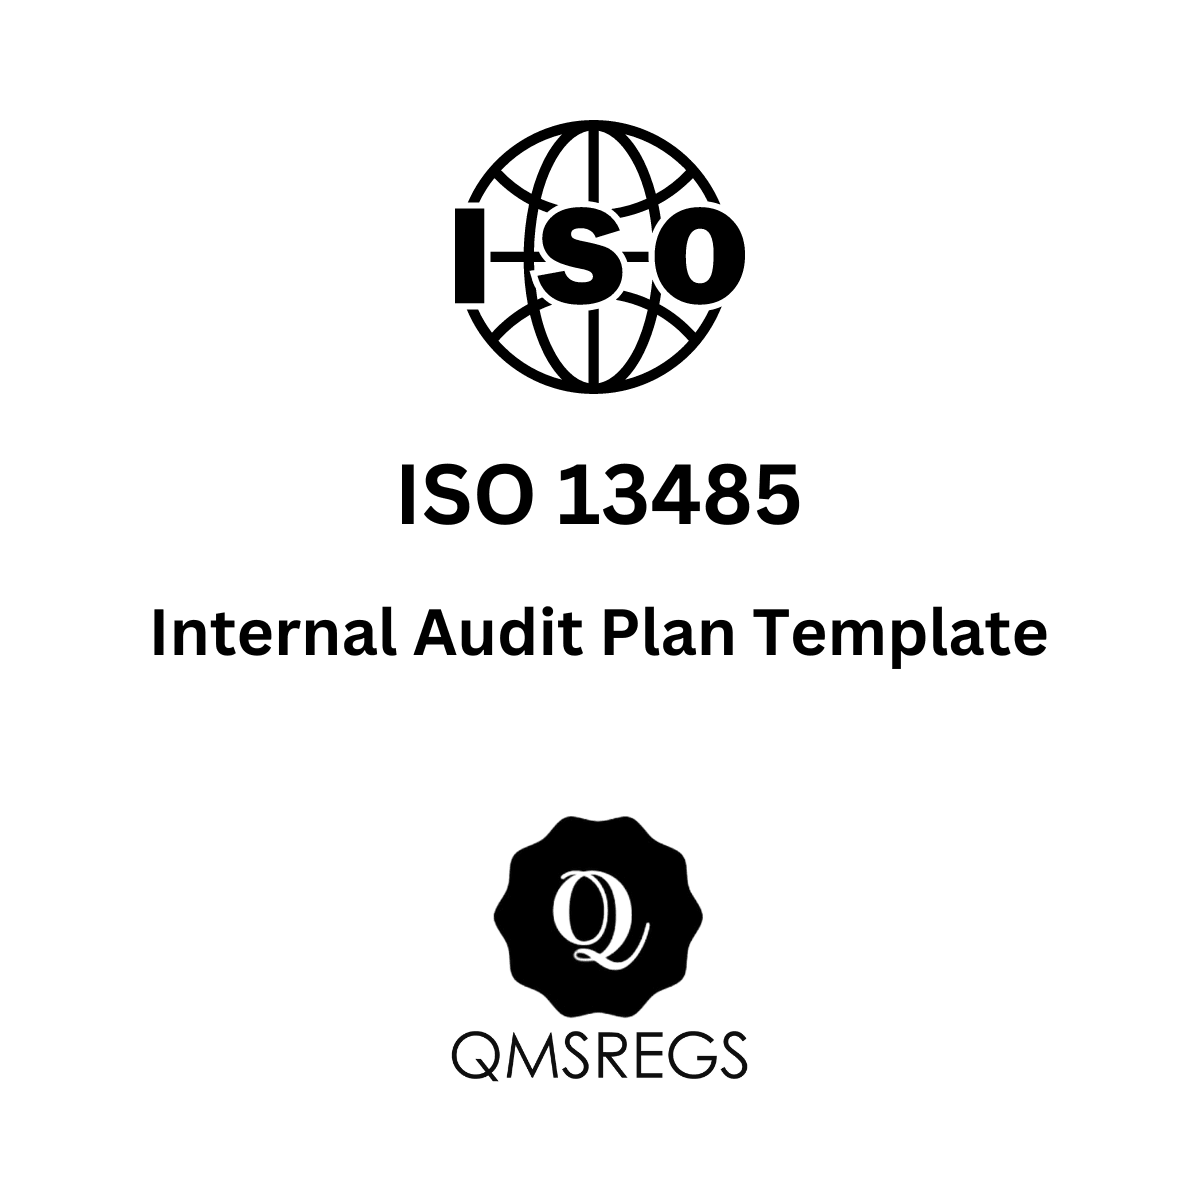 ISO 13485 Internal Audit Plan Template